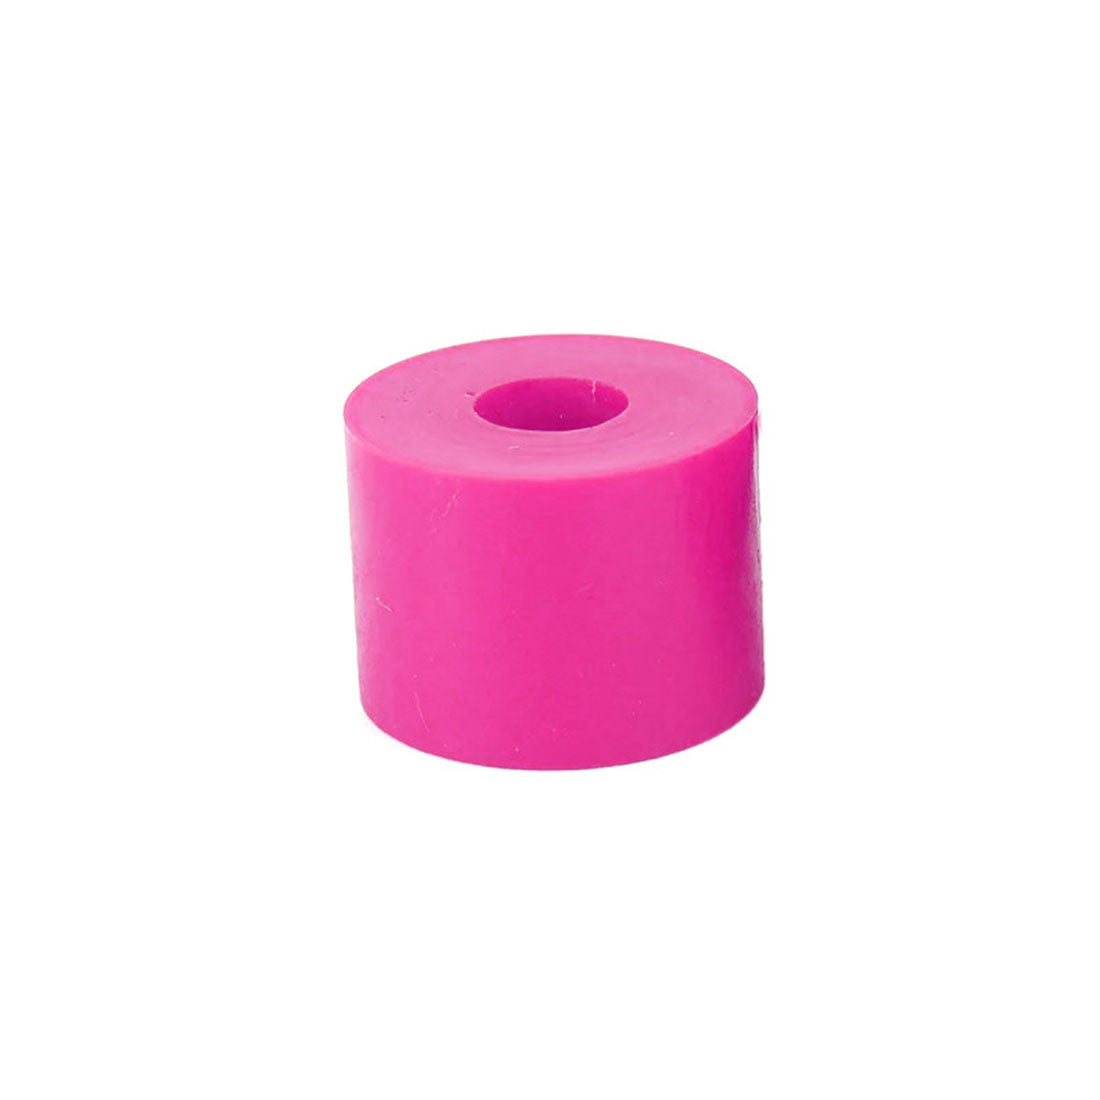 ABEC 11 Reflex Barrel Bushing - Single .750&quot; 77a - Pink Skateboard Hardware and Parts